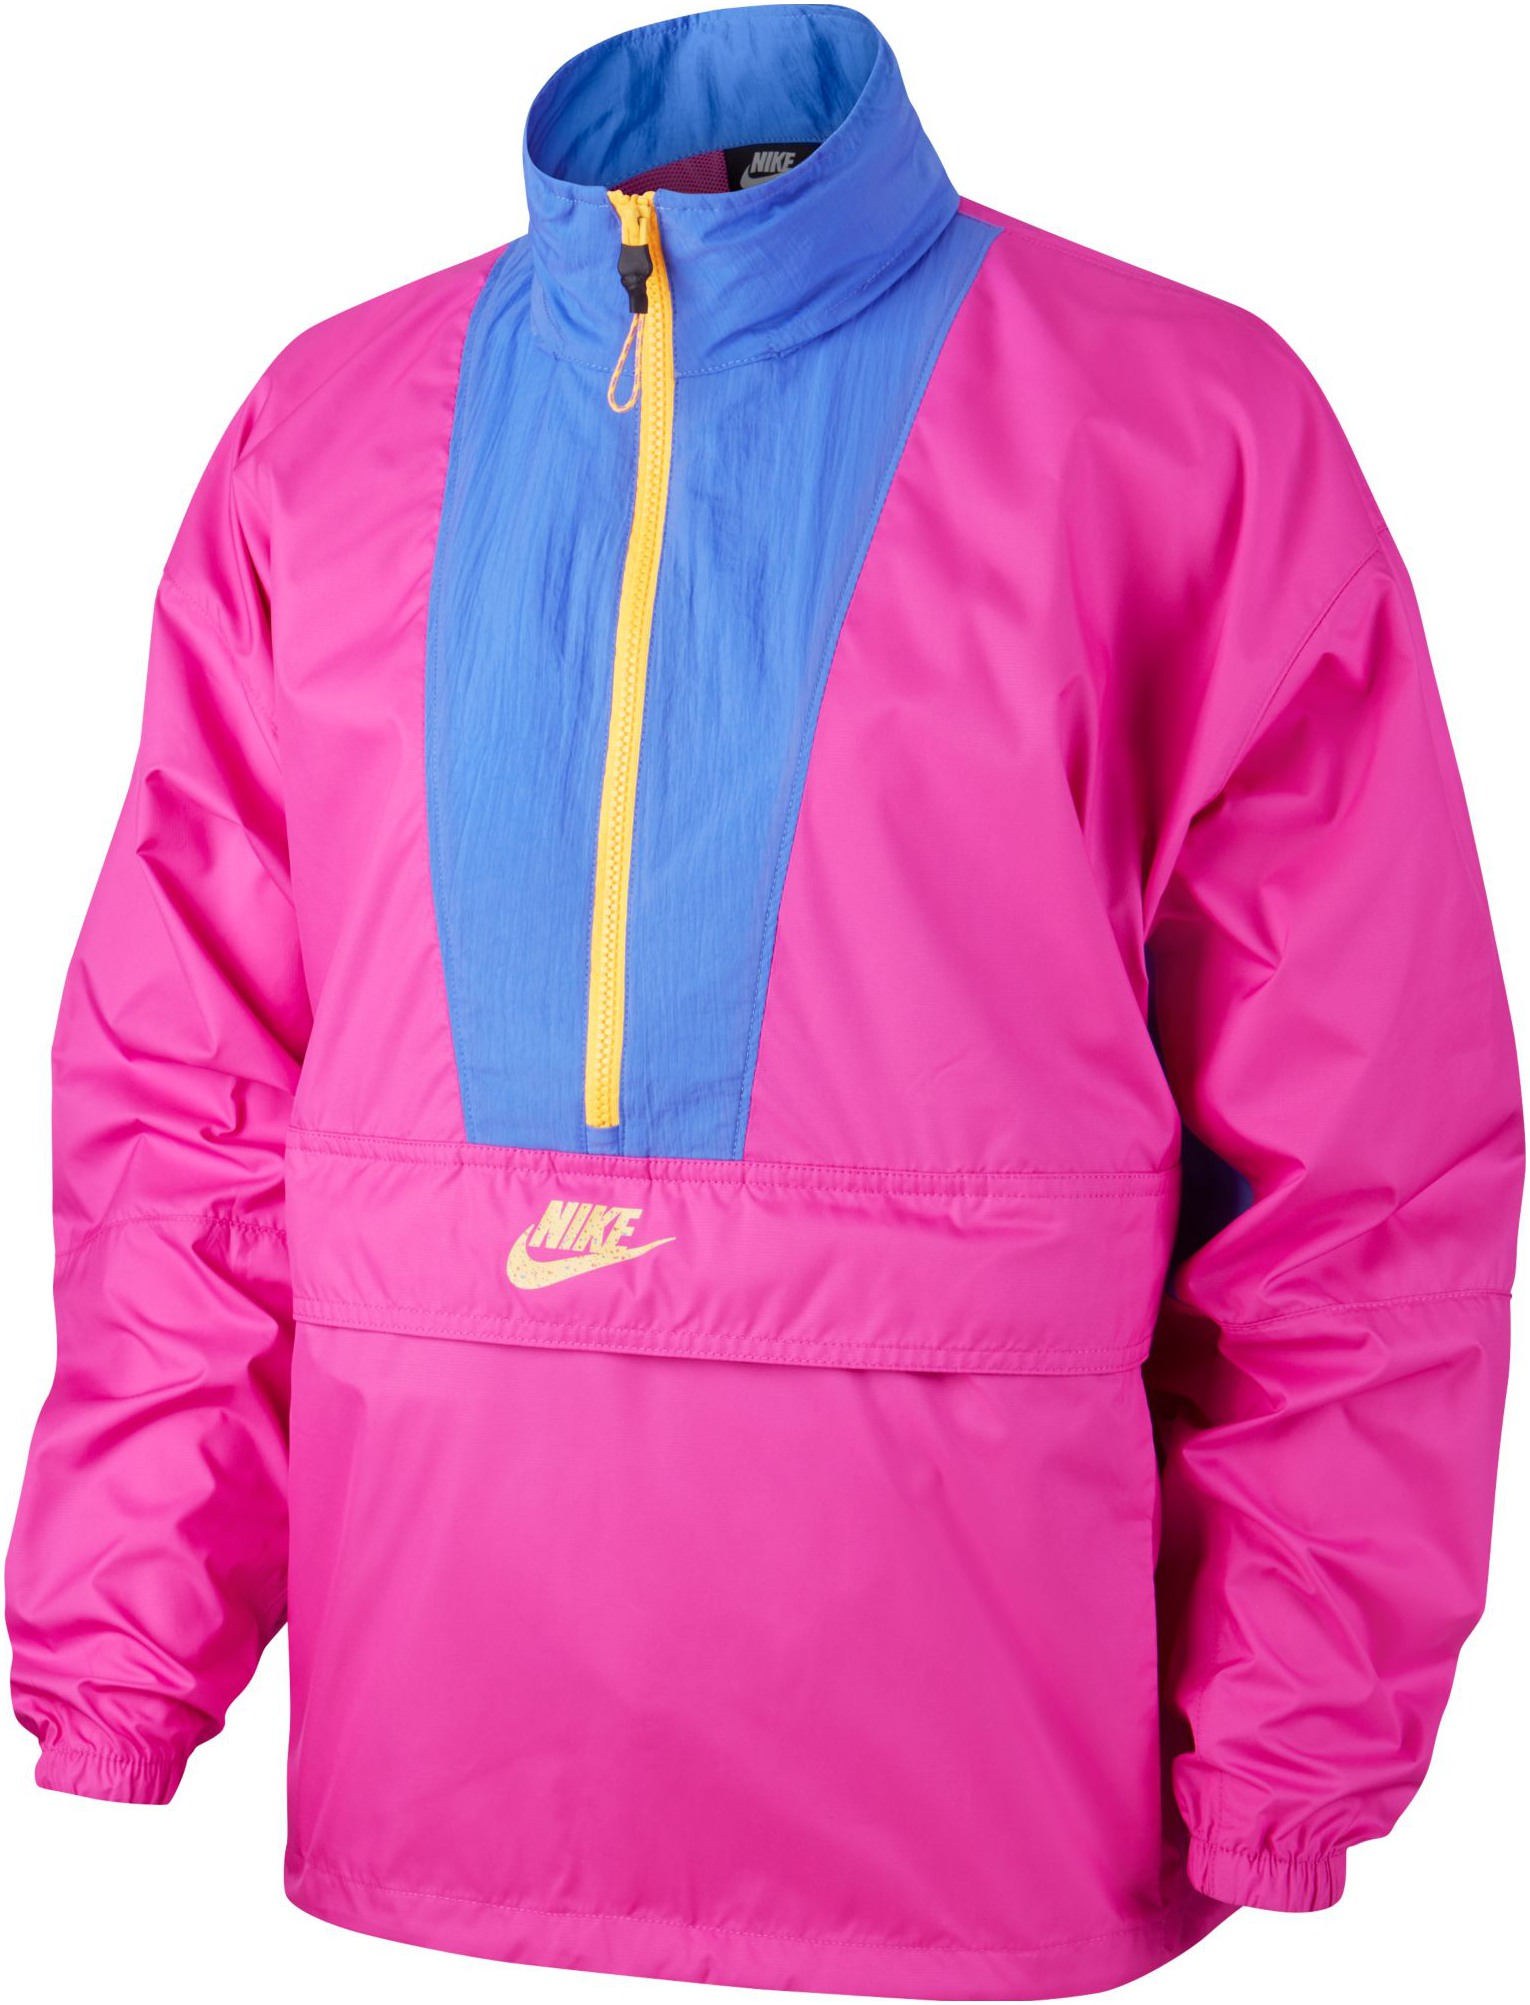 Comité busto Inducir Womens leisure jacket Nike SPORTSWEAR W pink | AD Sport.store